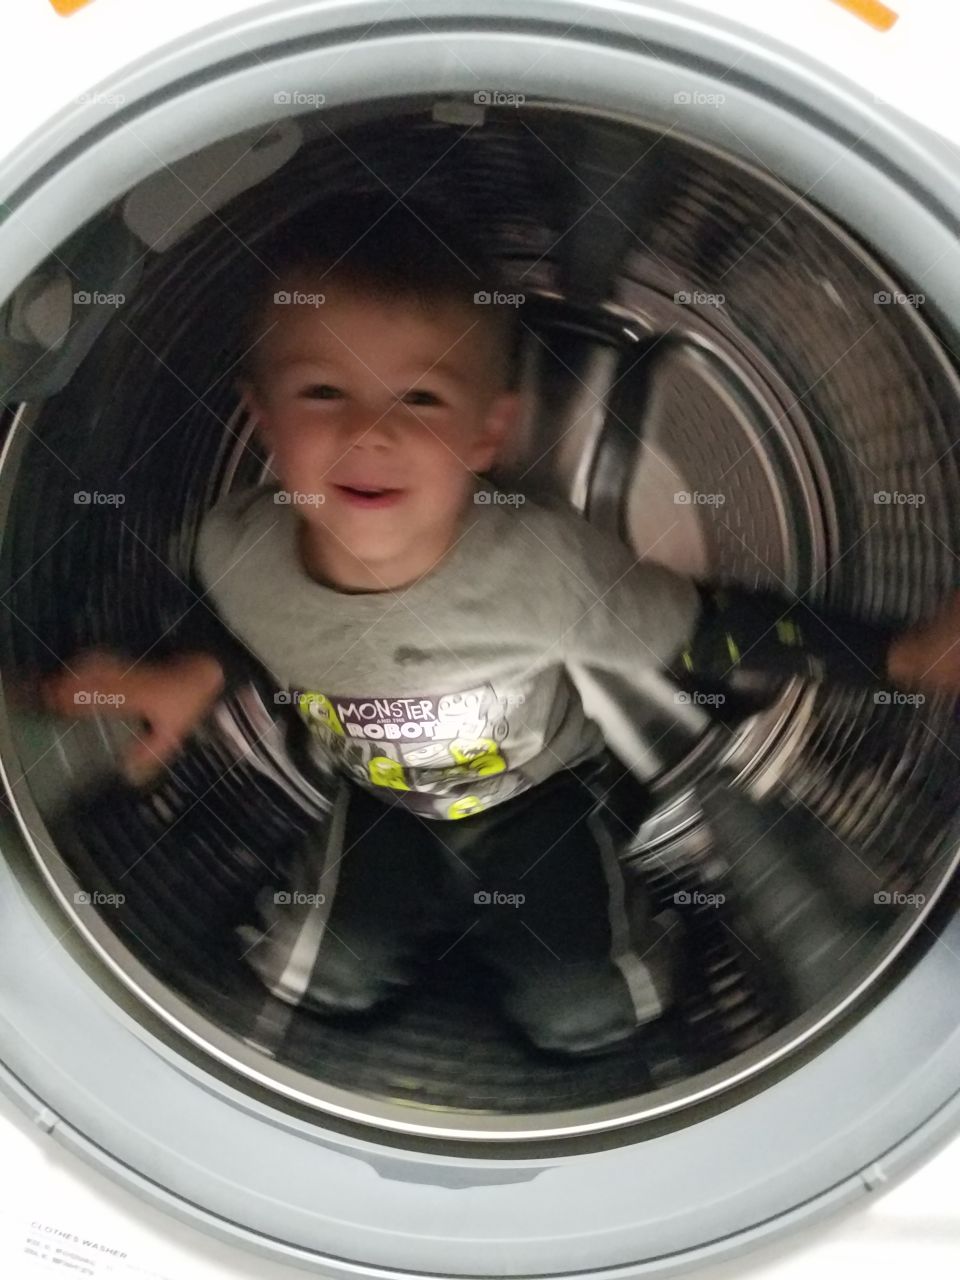 Playing in the washing machine